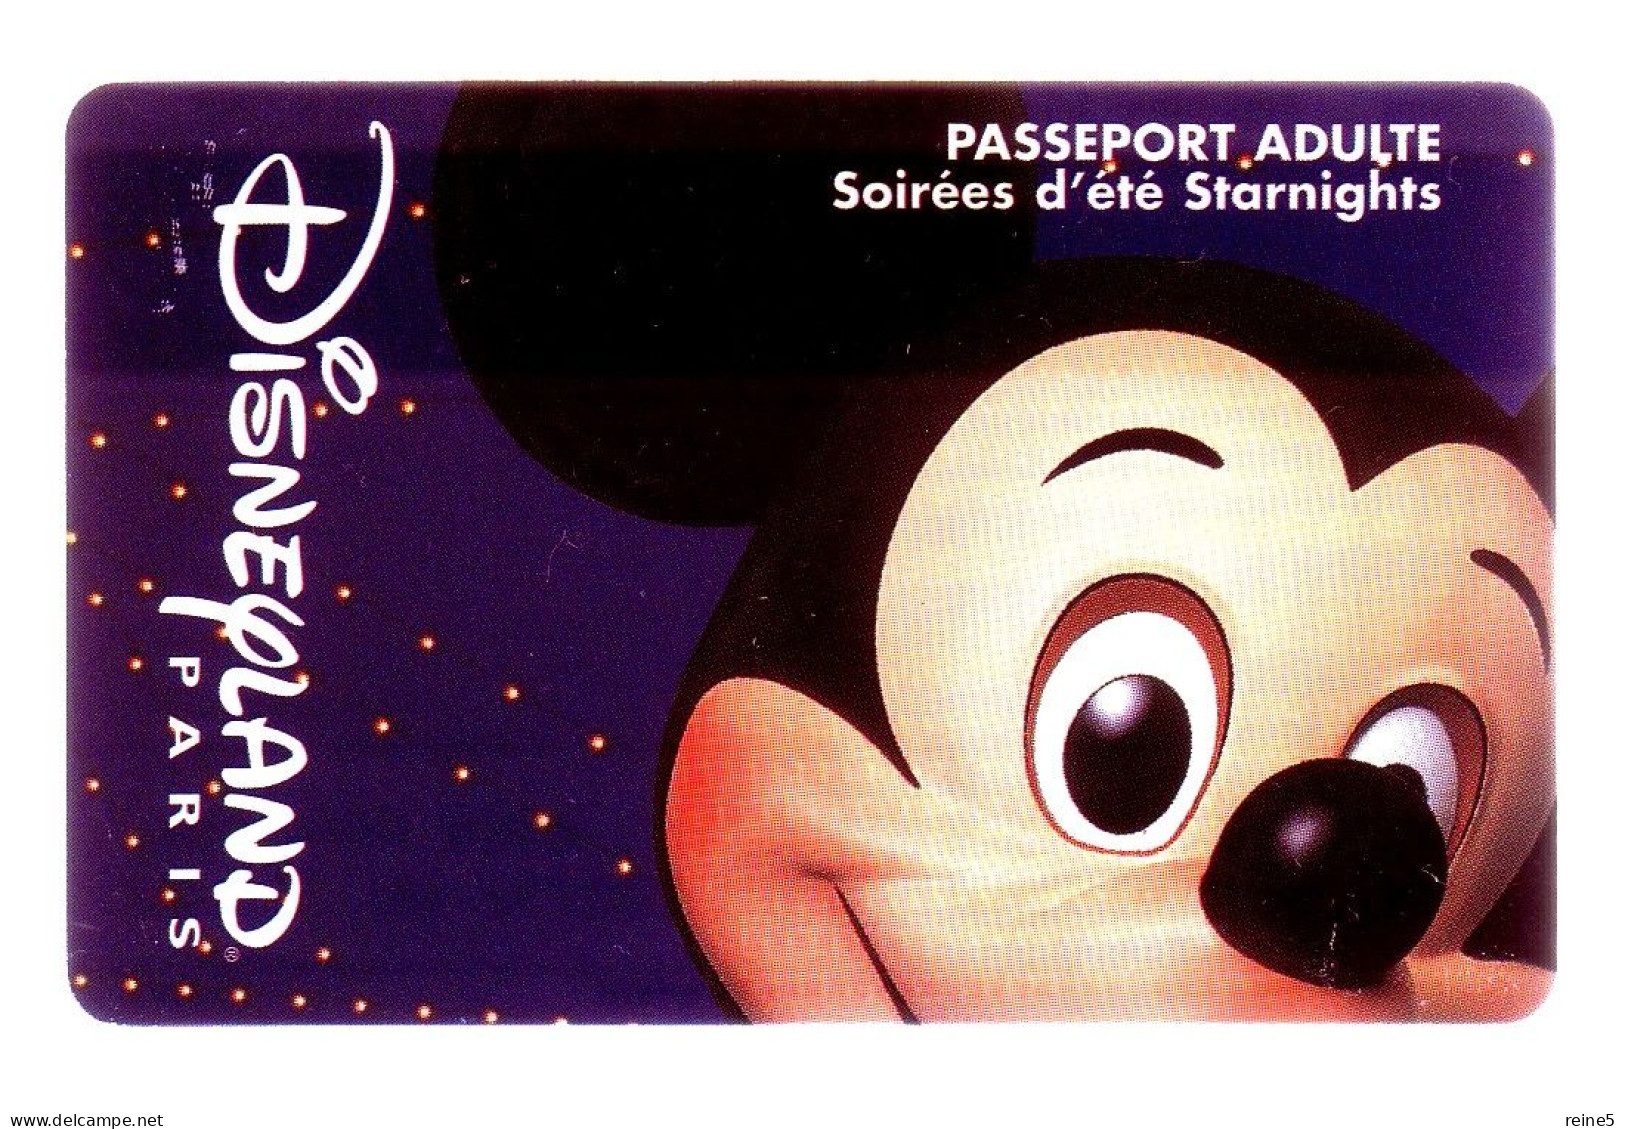 PASSEPORT ADULTE MICKEY SOIREES D'ETE STARNIGHTS DISNEYLAND PARIS -TRES BON ETAT -REF-PASS DISNEY-14 - Disney Passports